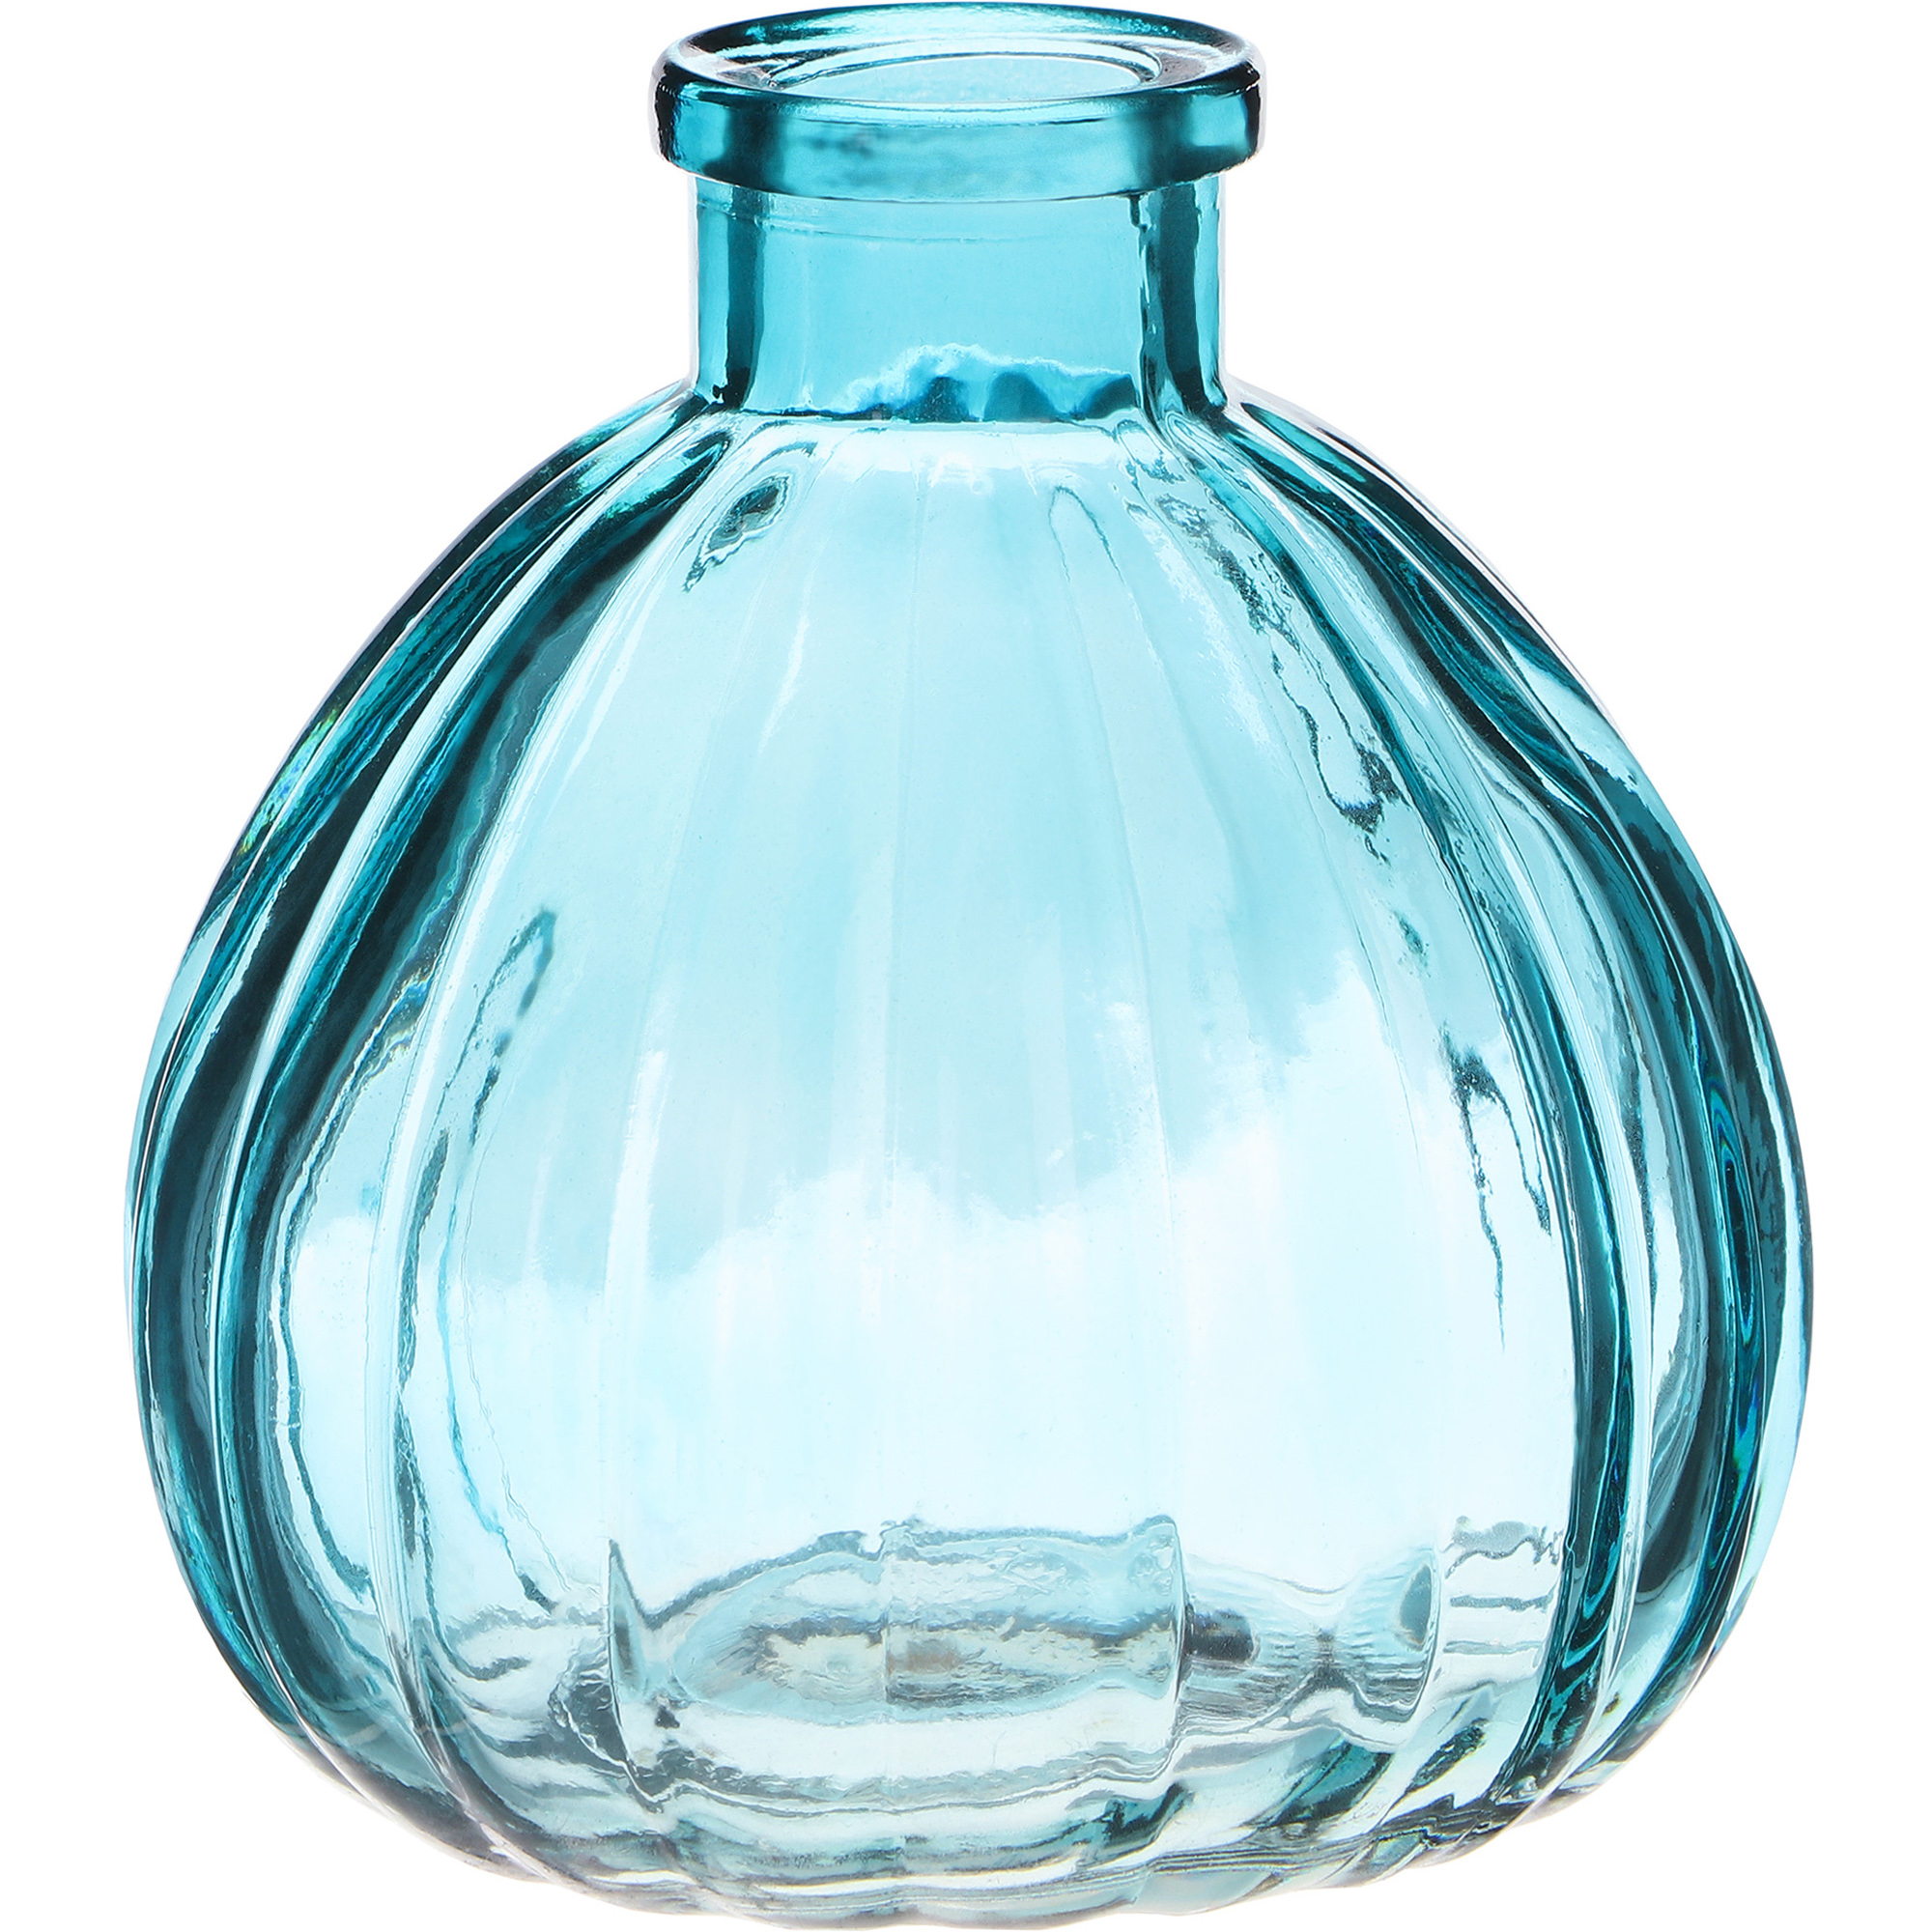 фото Ваза стеклянная hakbijl glass mini vase голубая 8,5х9,5 см